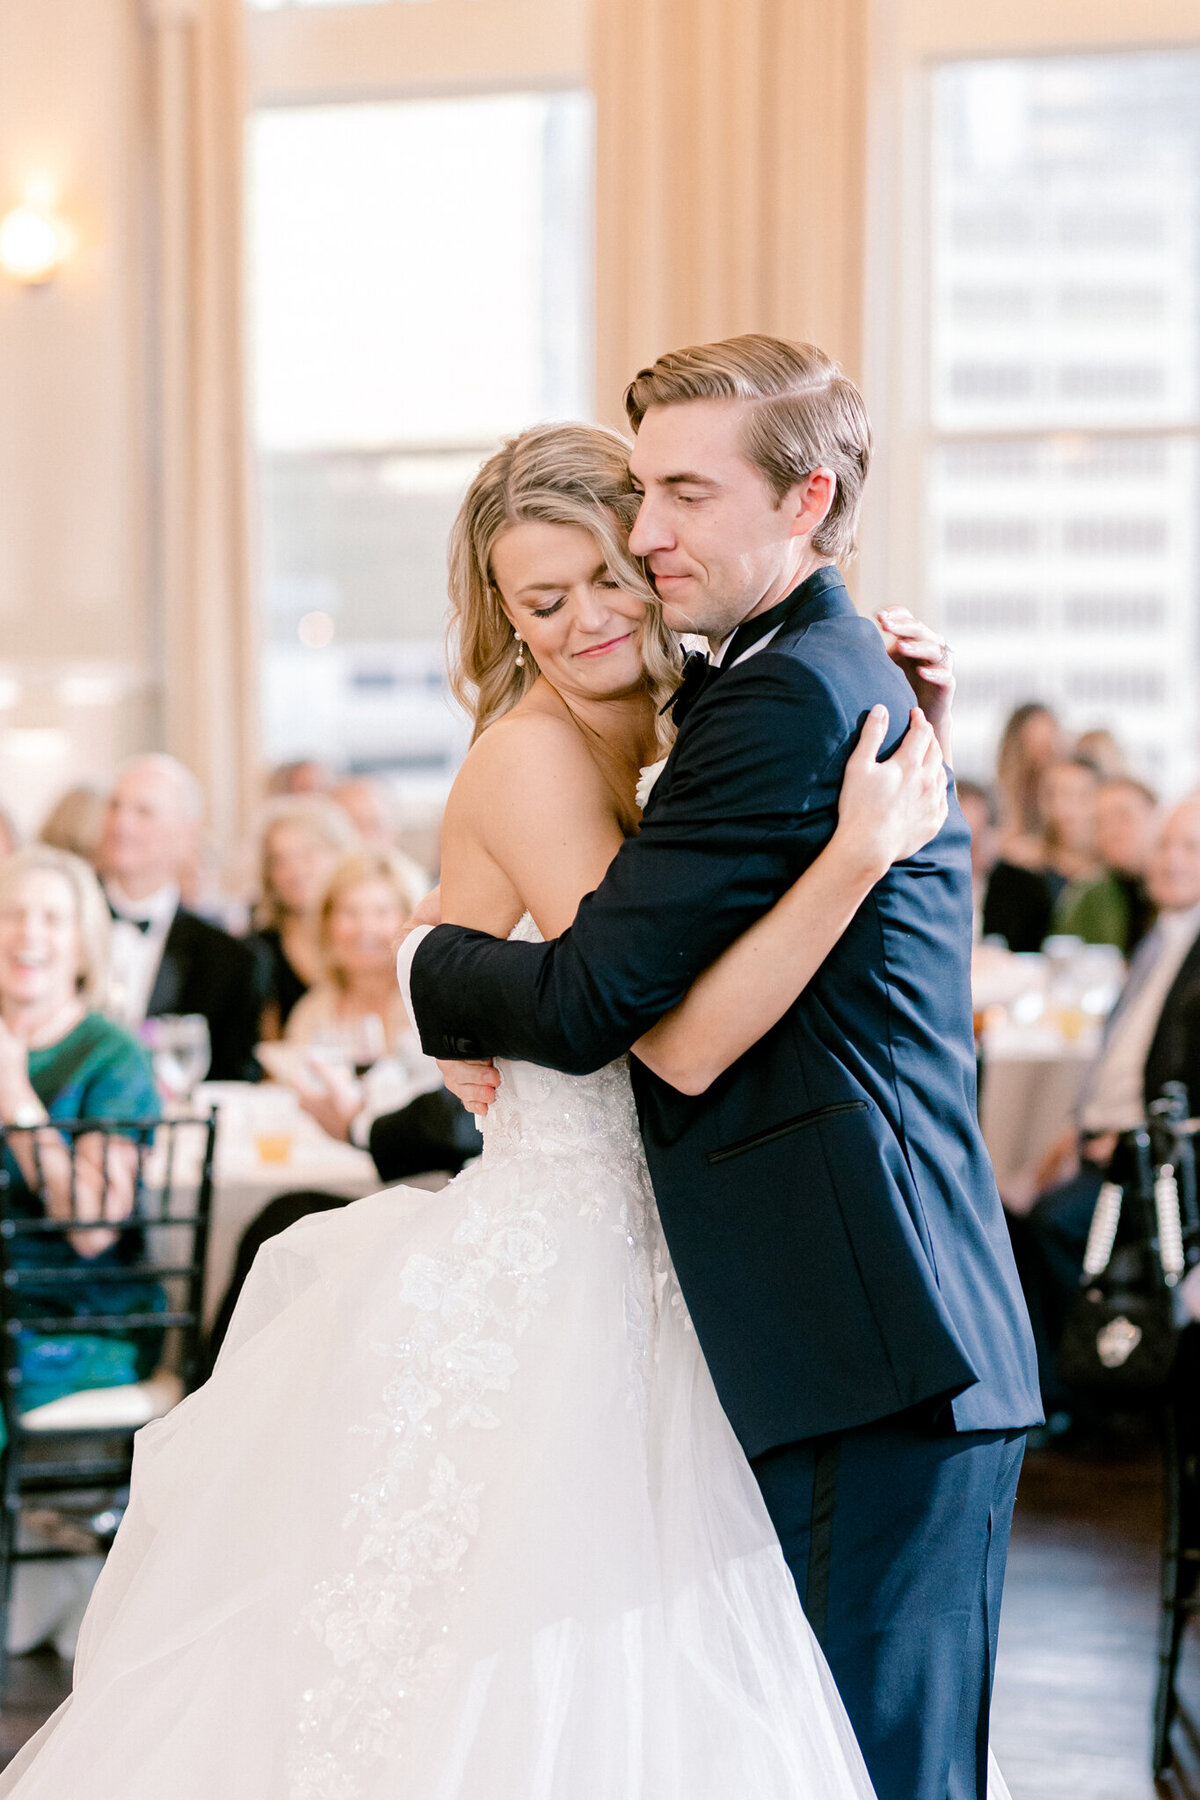 Shelby & Thomas's Wedding at HPUMC The Room on Main | Dallas Wedding Photographer | Sami Kathryn Photography-195